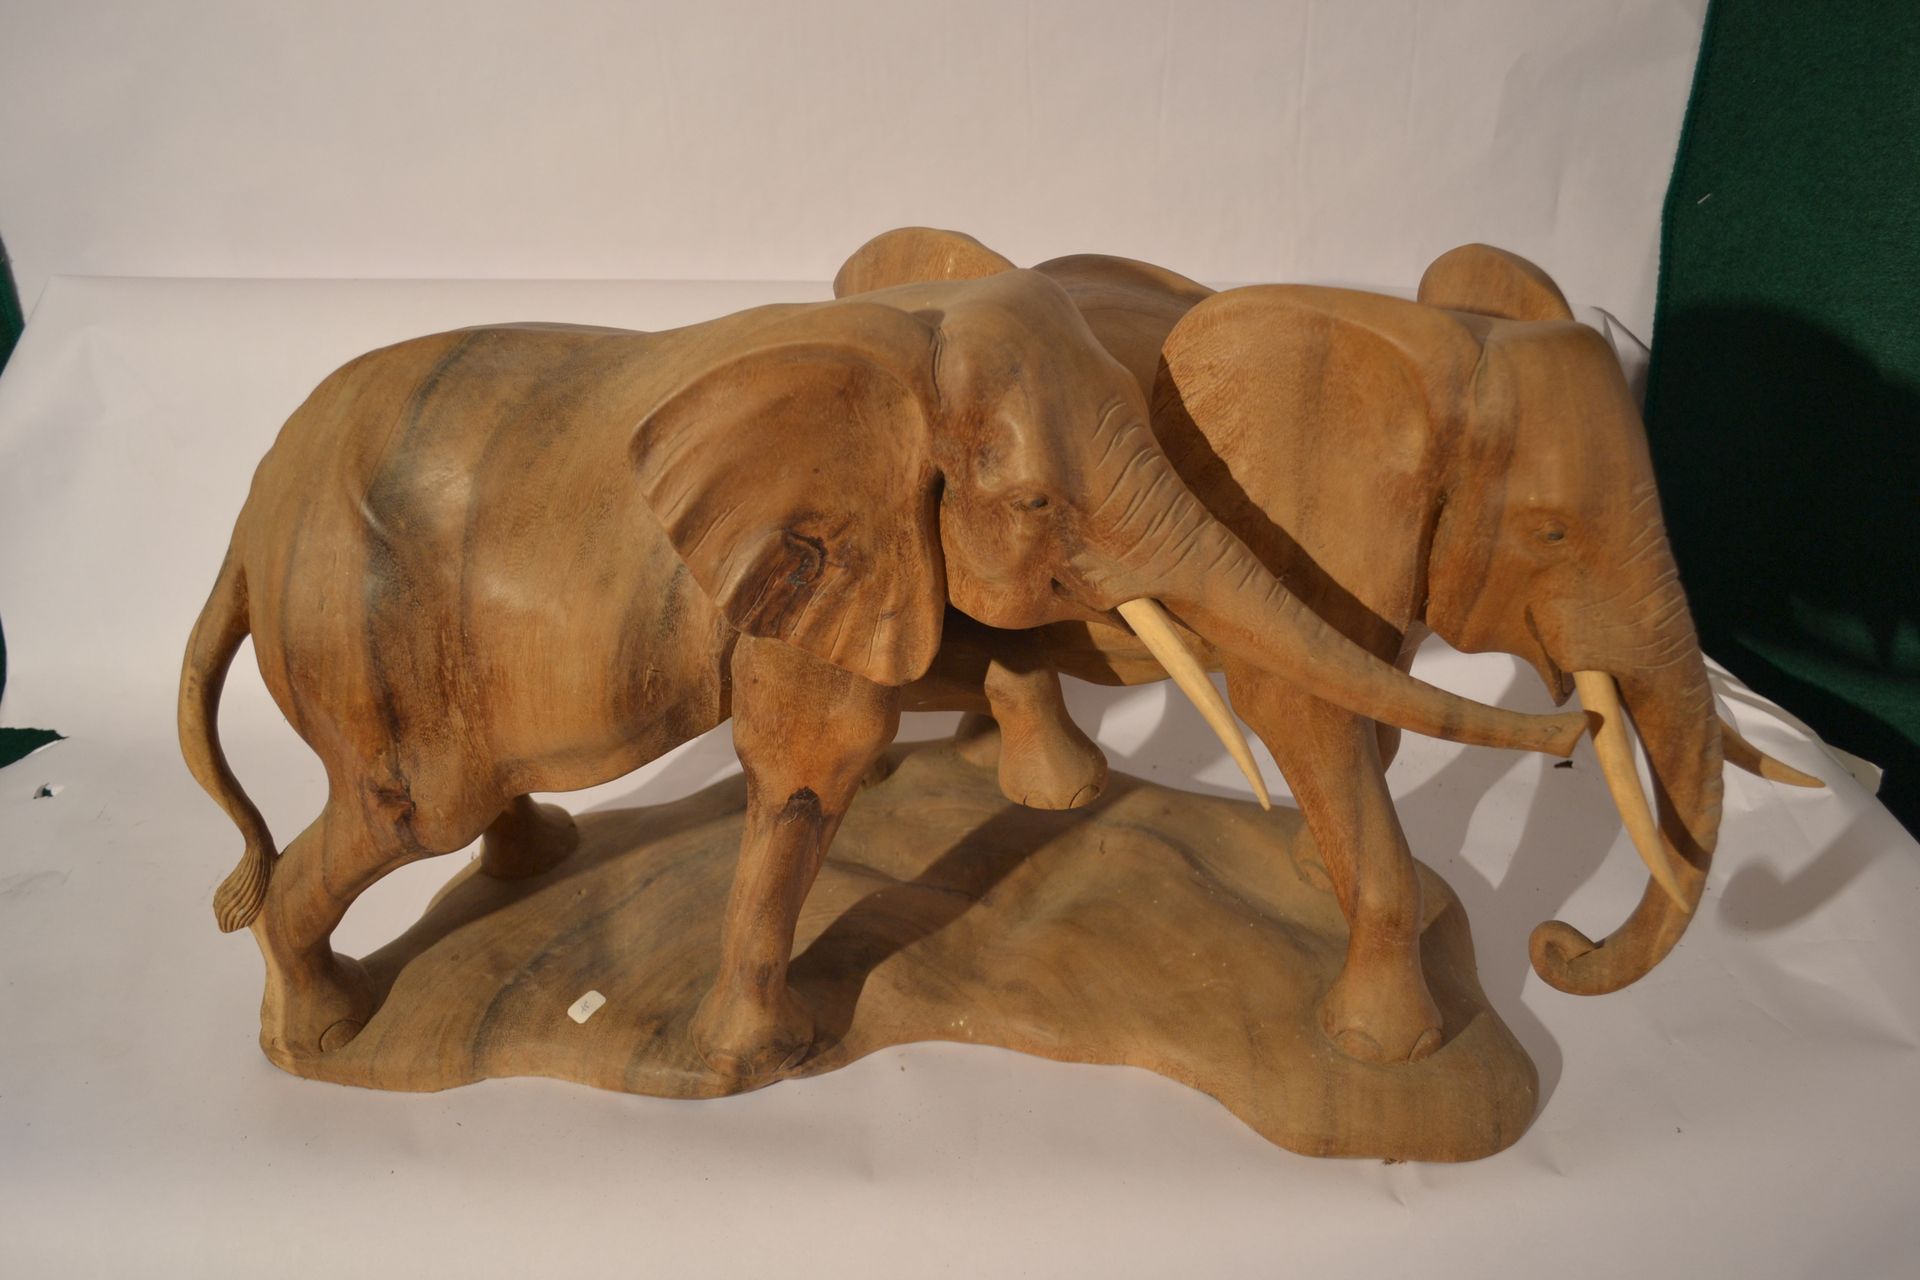 Null Handgeschnitztes Elefantenpaar.

Suar-Holz 

70 x 40 x 30

Gewicht:13 Kg.